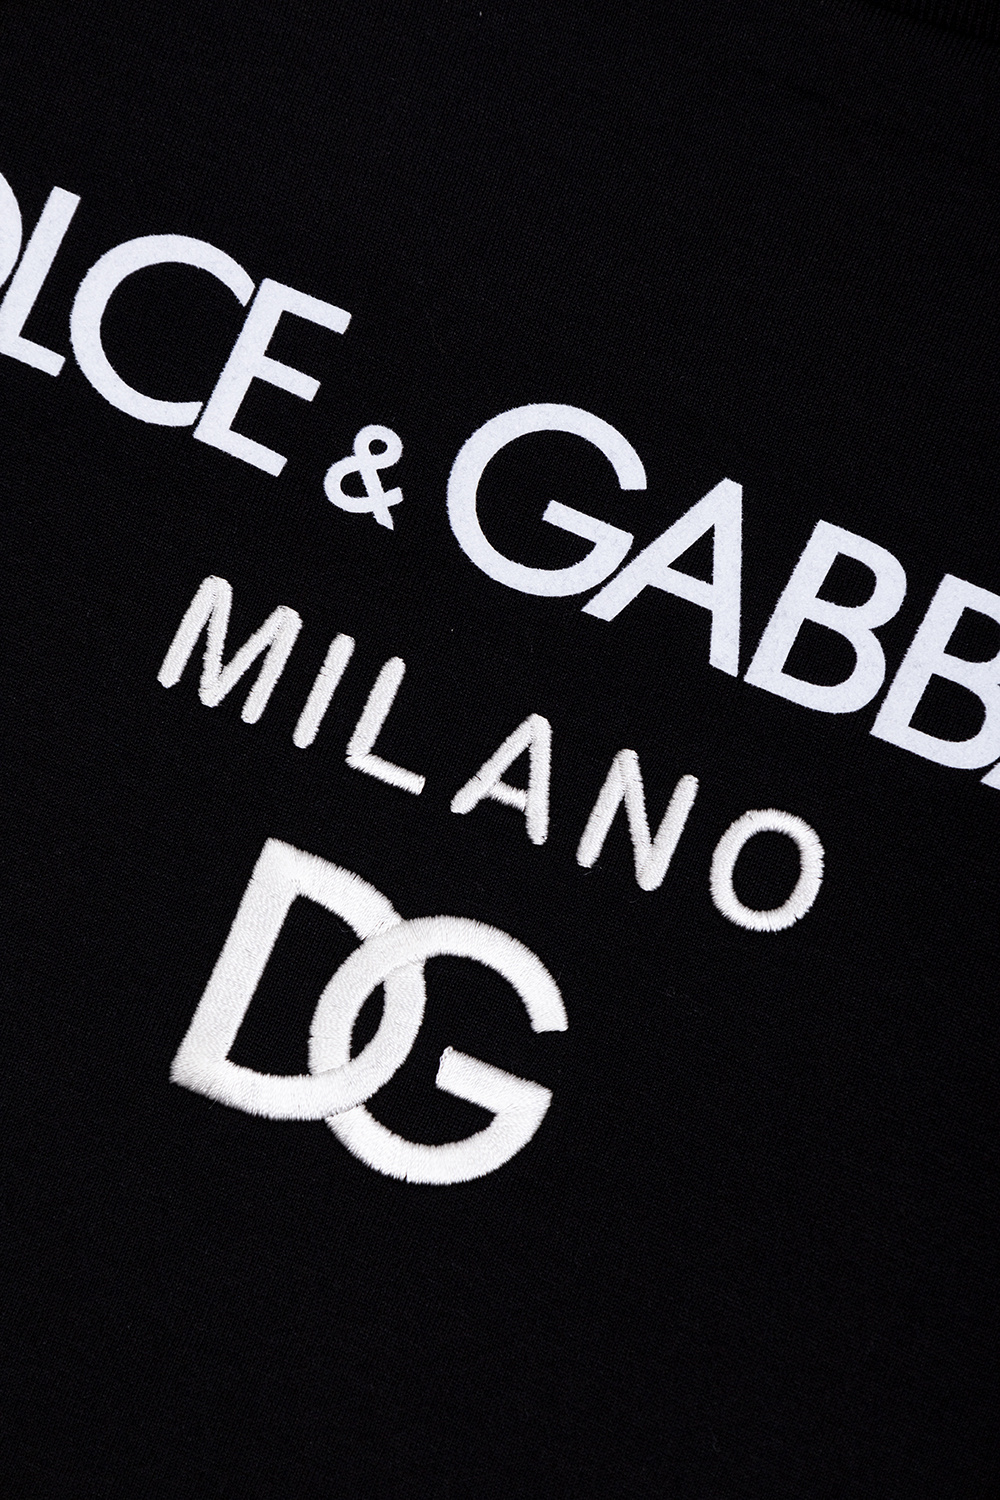 Dolce & Gabbana Kids Dolce & Gabbana Marlene crystal-embellished clutch